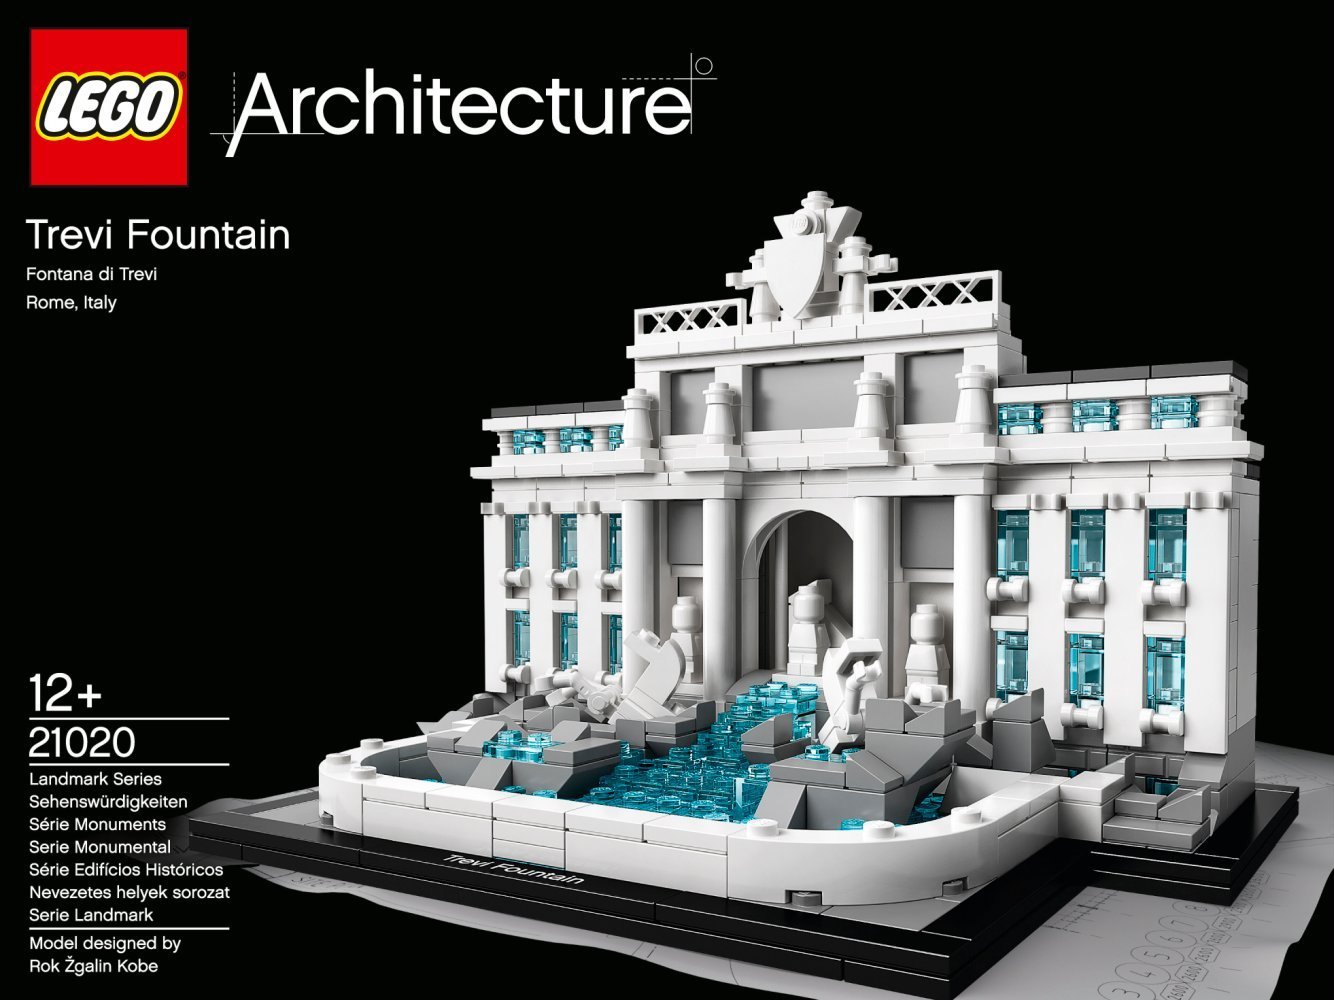 Secréte misundelse Skuespiller A look at the Unreleased Trevi Fountain LEGO Set #21020 - Tom Alphin